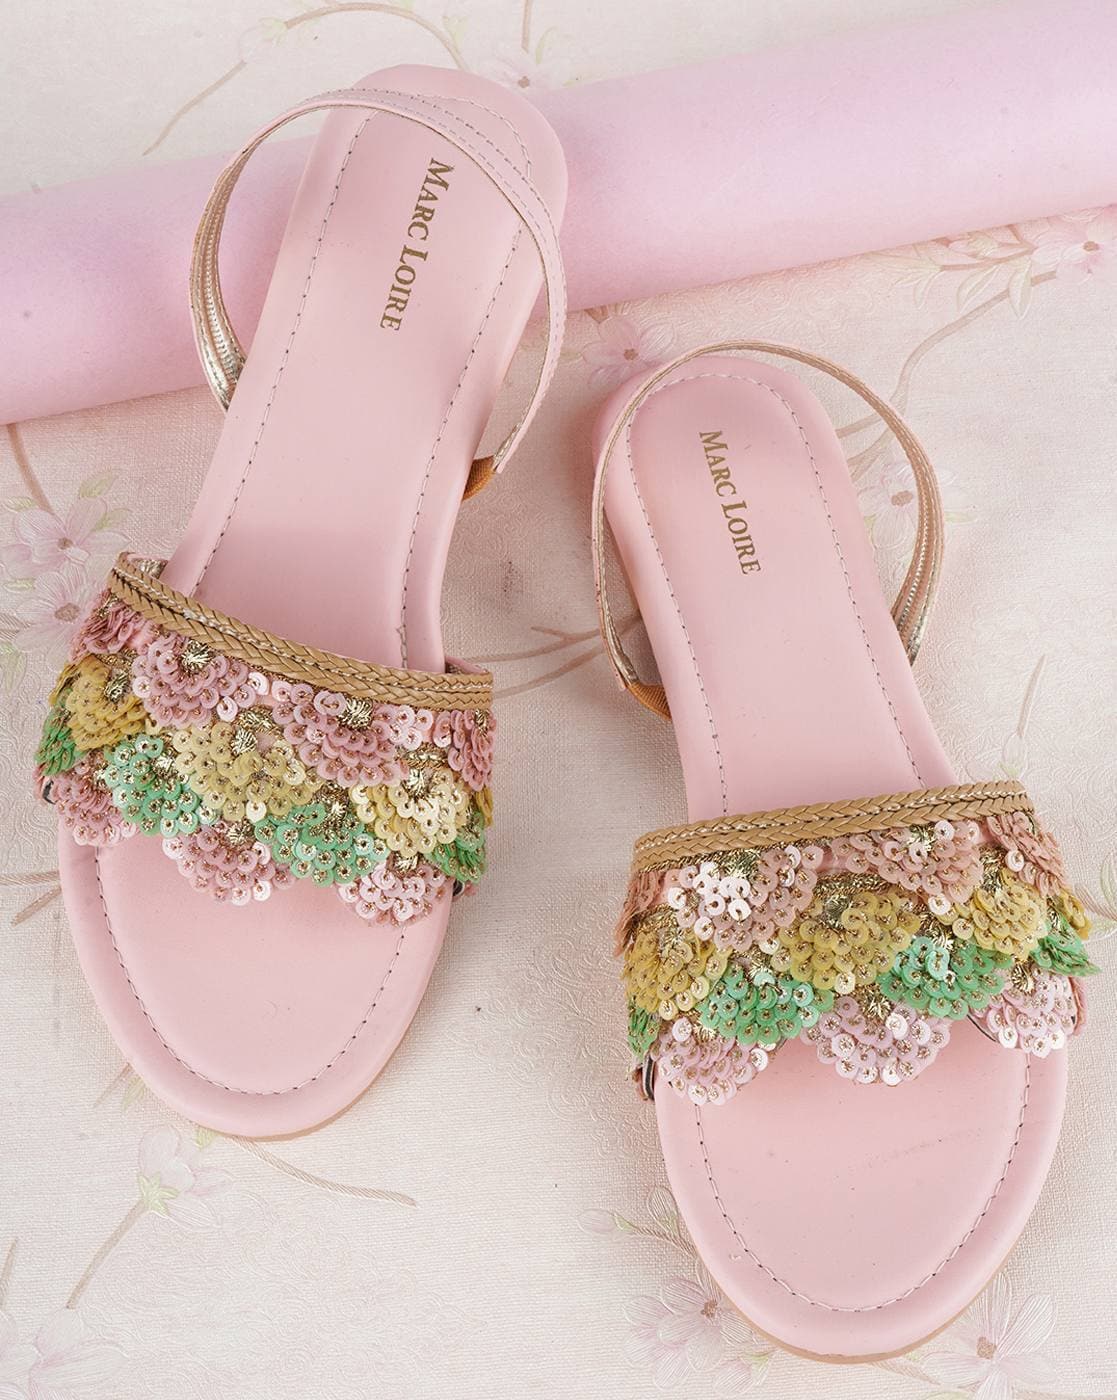 Buy Pink Pearls Sandals Wedding Sandals Pearl Sandals Greek Online in India   Etsy